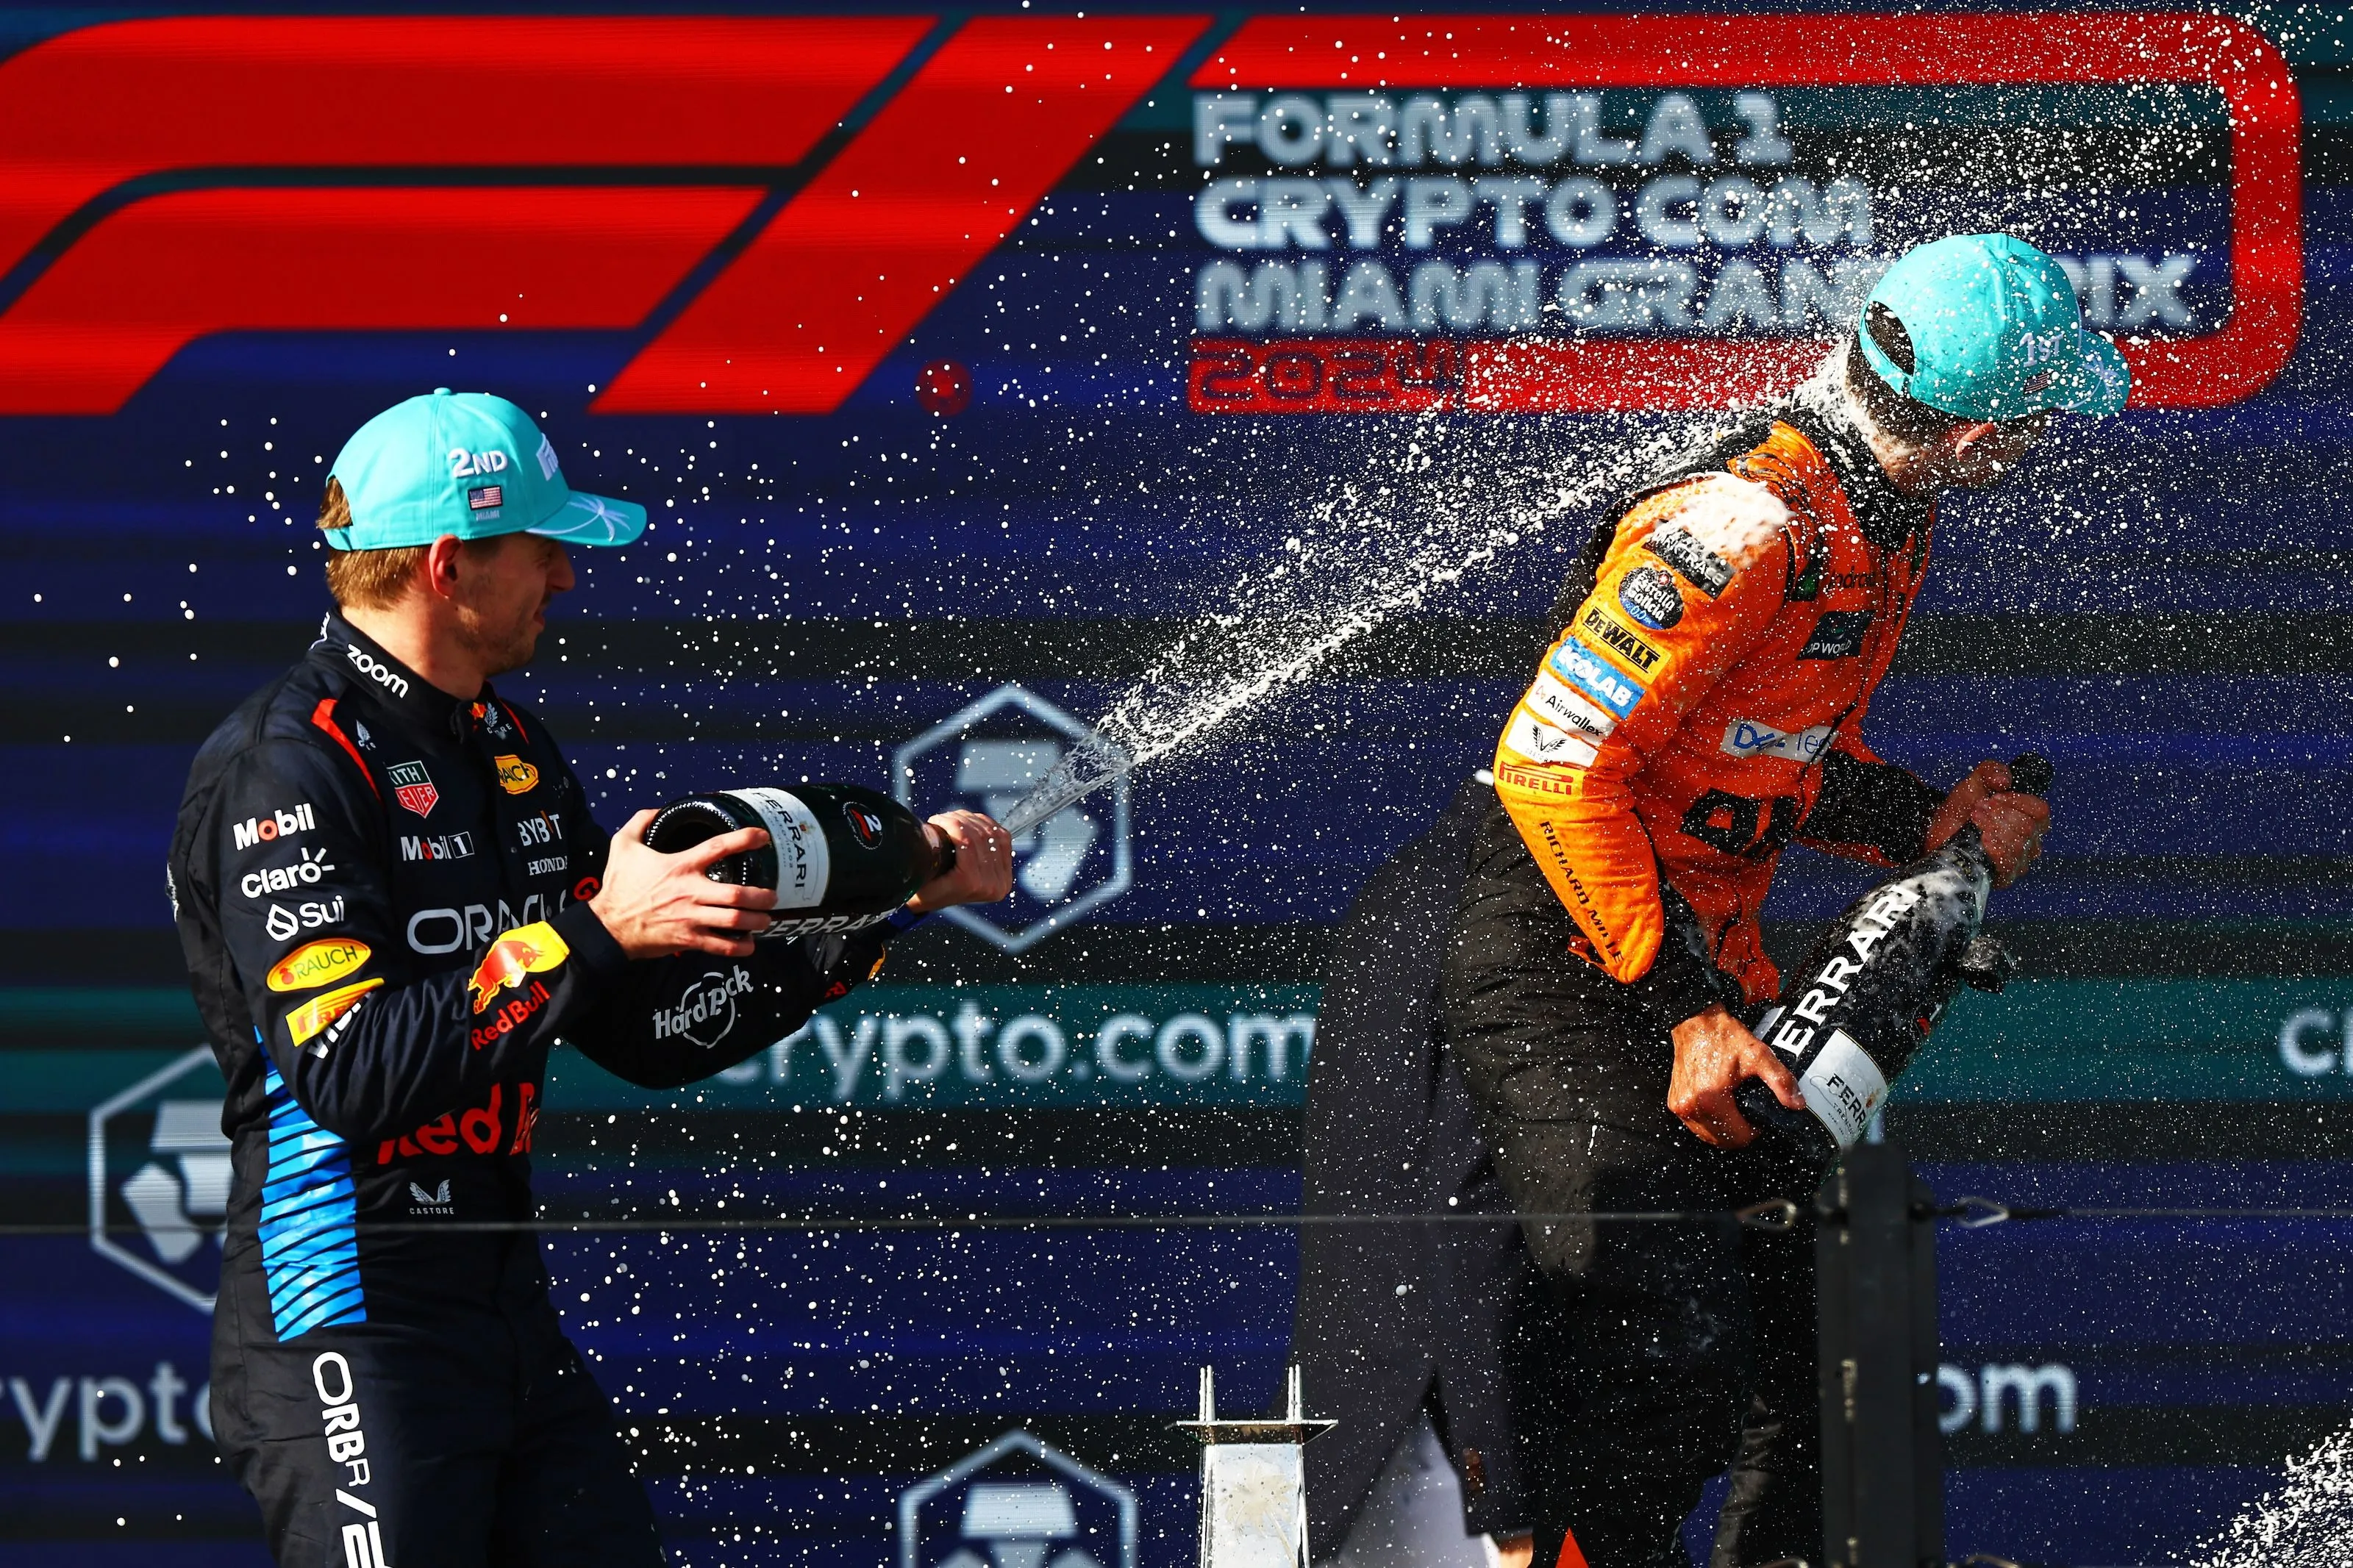 Miami Grand Prix Podium- Max Verstappen In P2 And Lando Norris On The Top Step